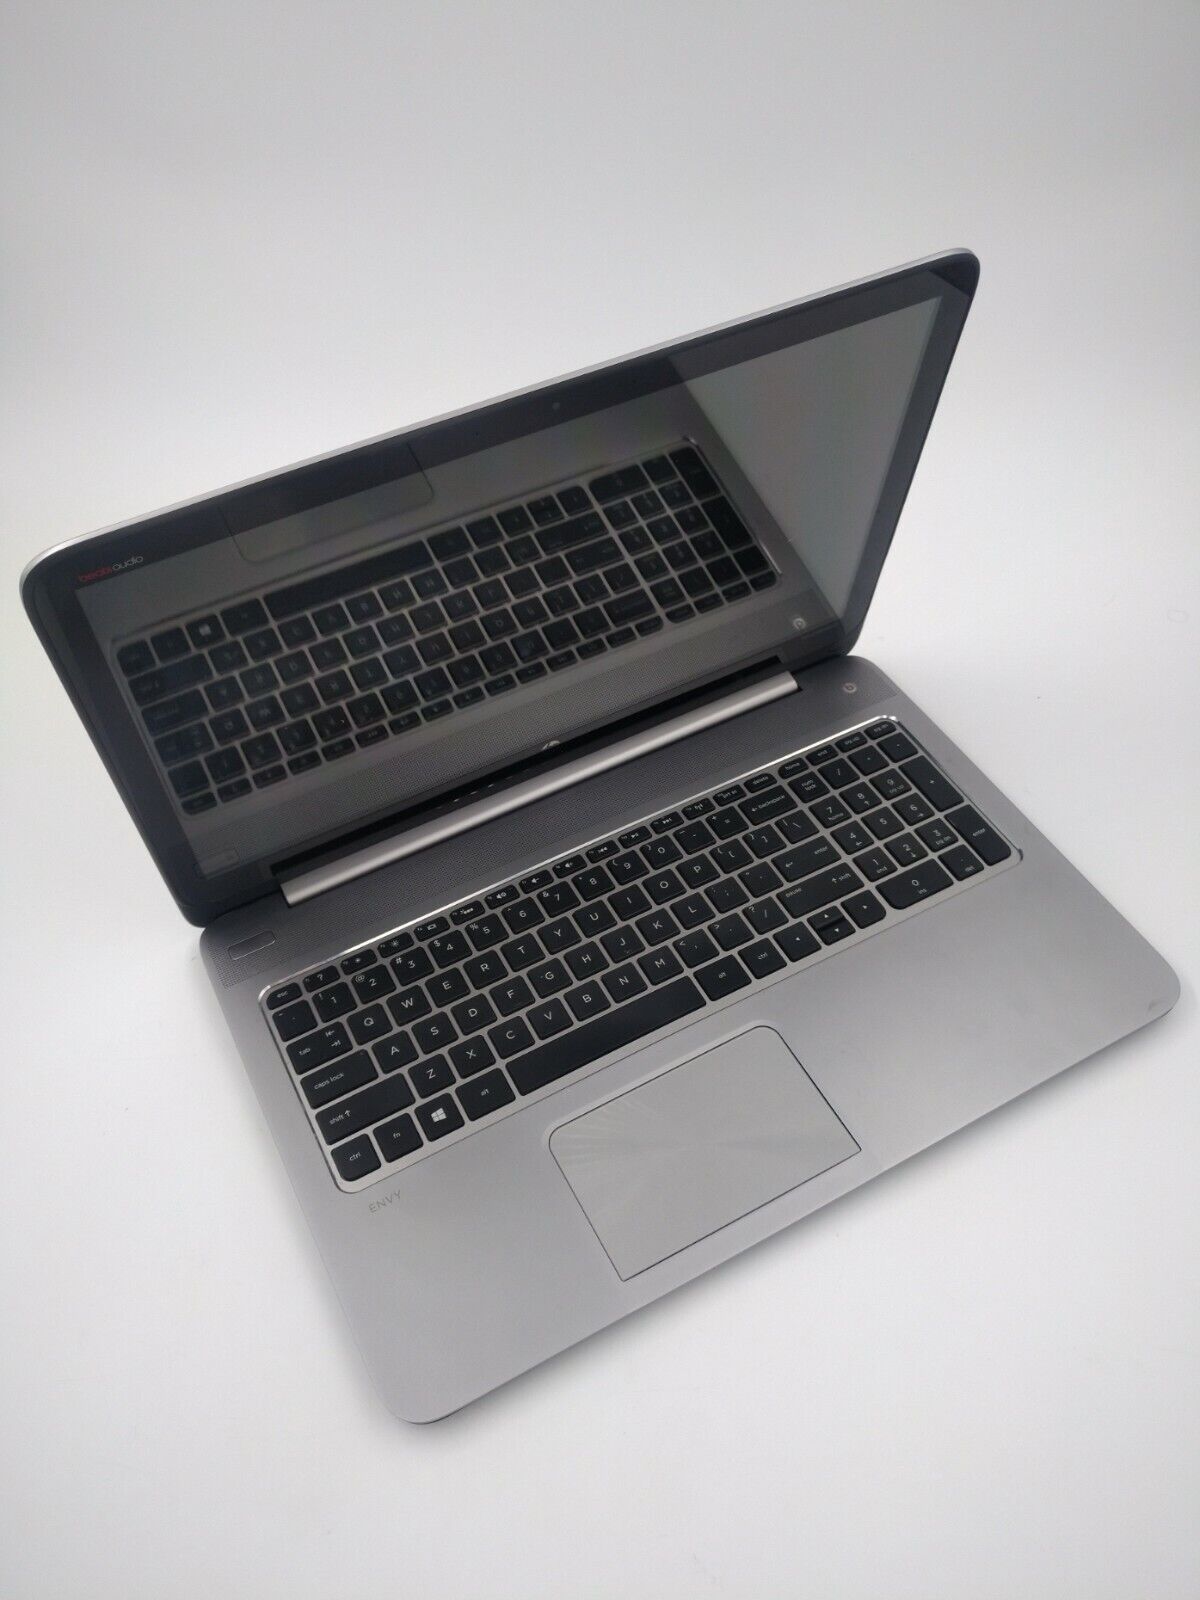 Hp Envy M6 touchscreen laptop, AMD A10, 8 gb RAM, 750 GB HDD